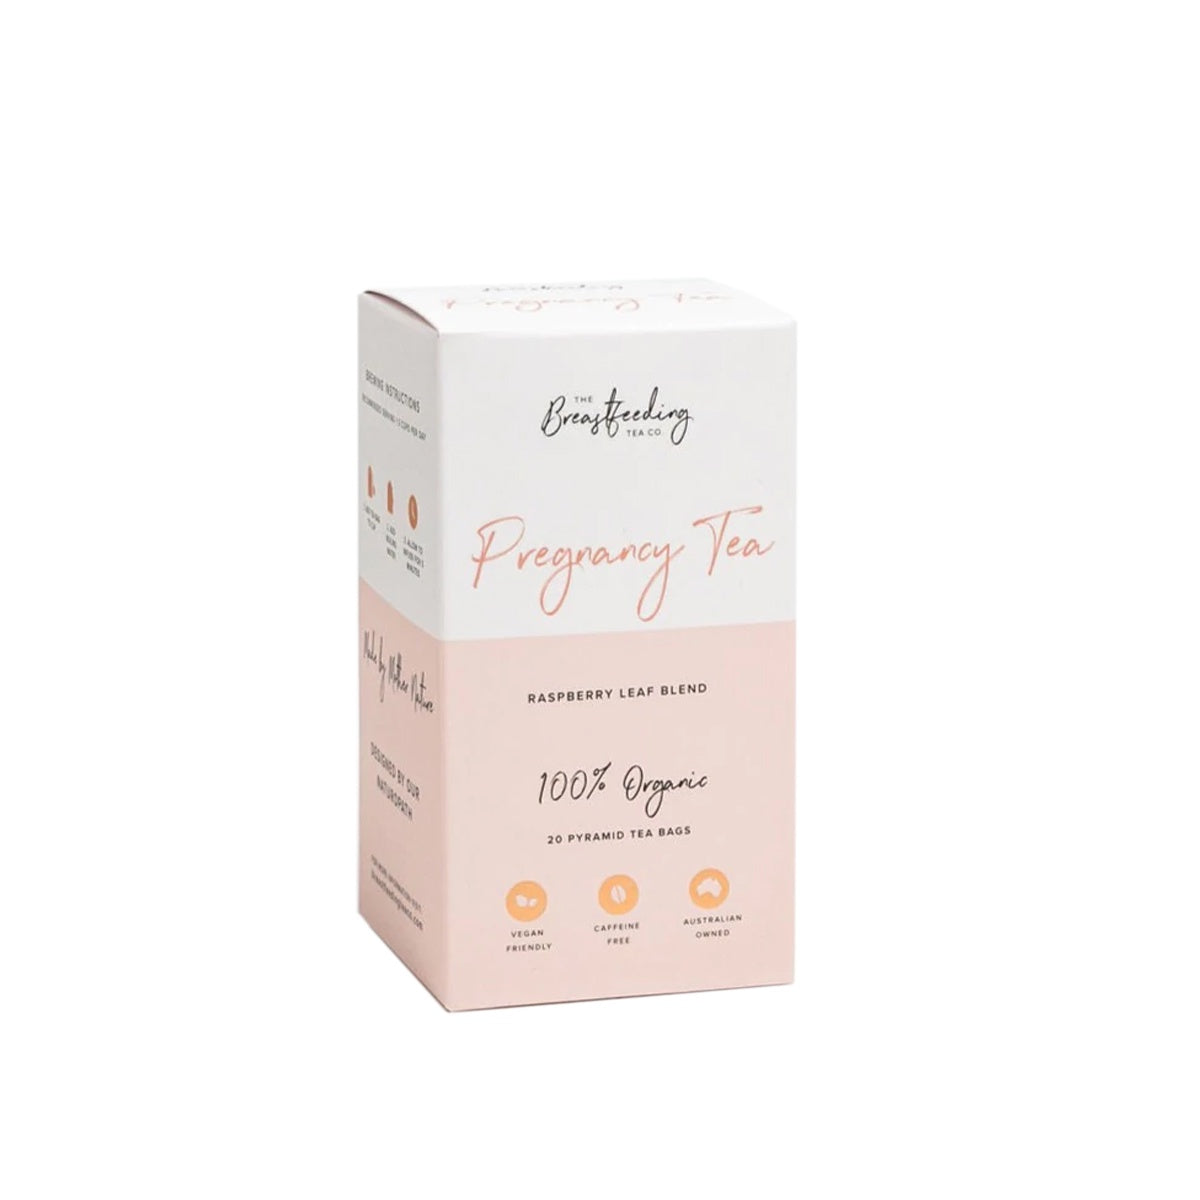 Pregnancy Tea - Pyramid Tea Bags - 20 Serves